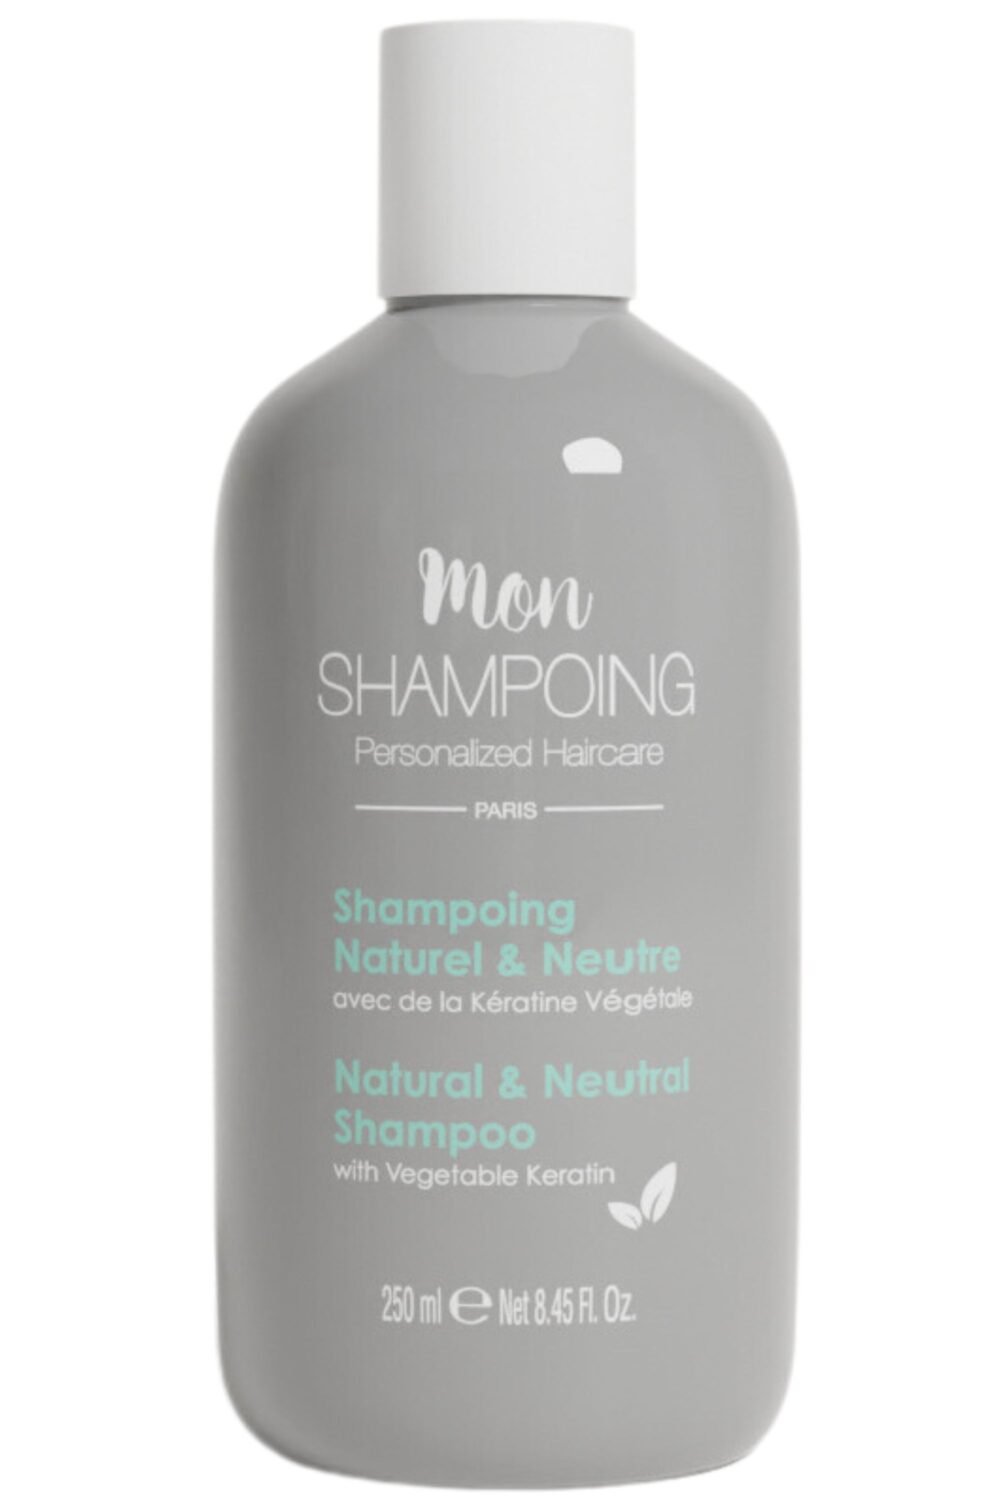 Mon shampoing - Shampoing naturel & neutre pour tous types de cheveux 250ml